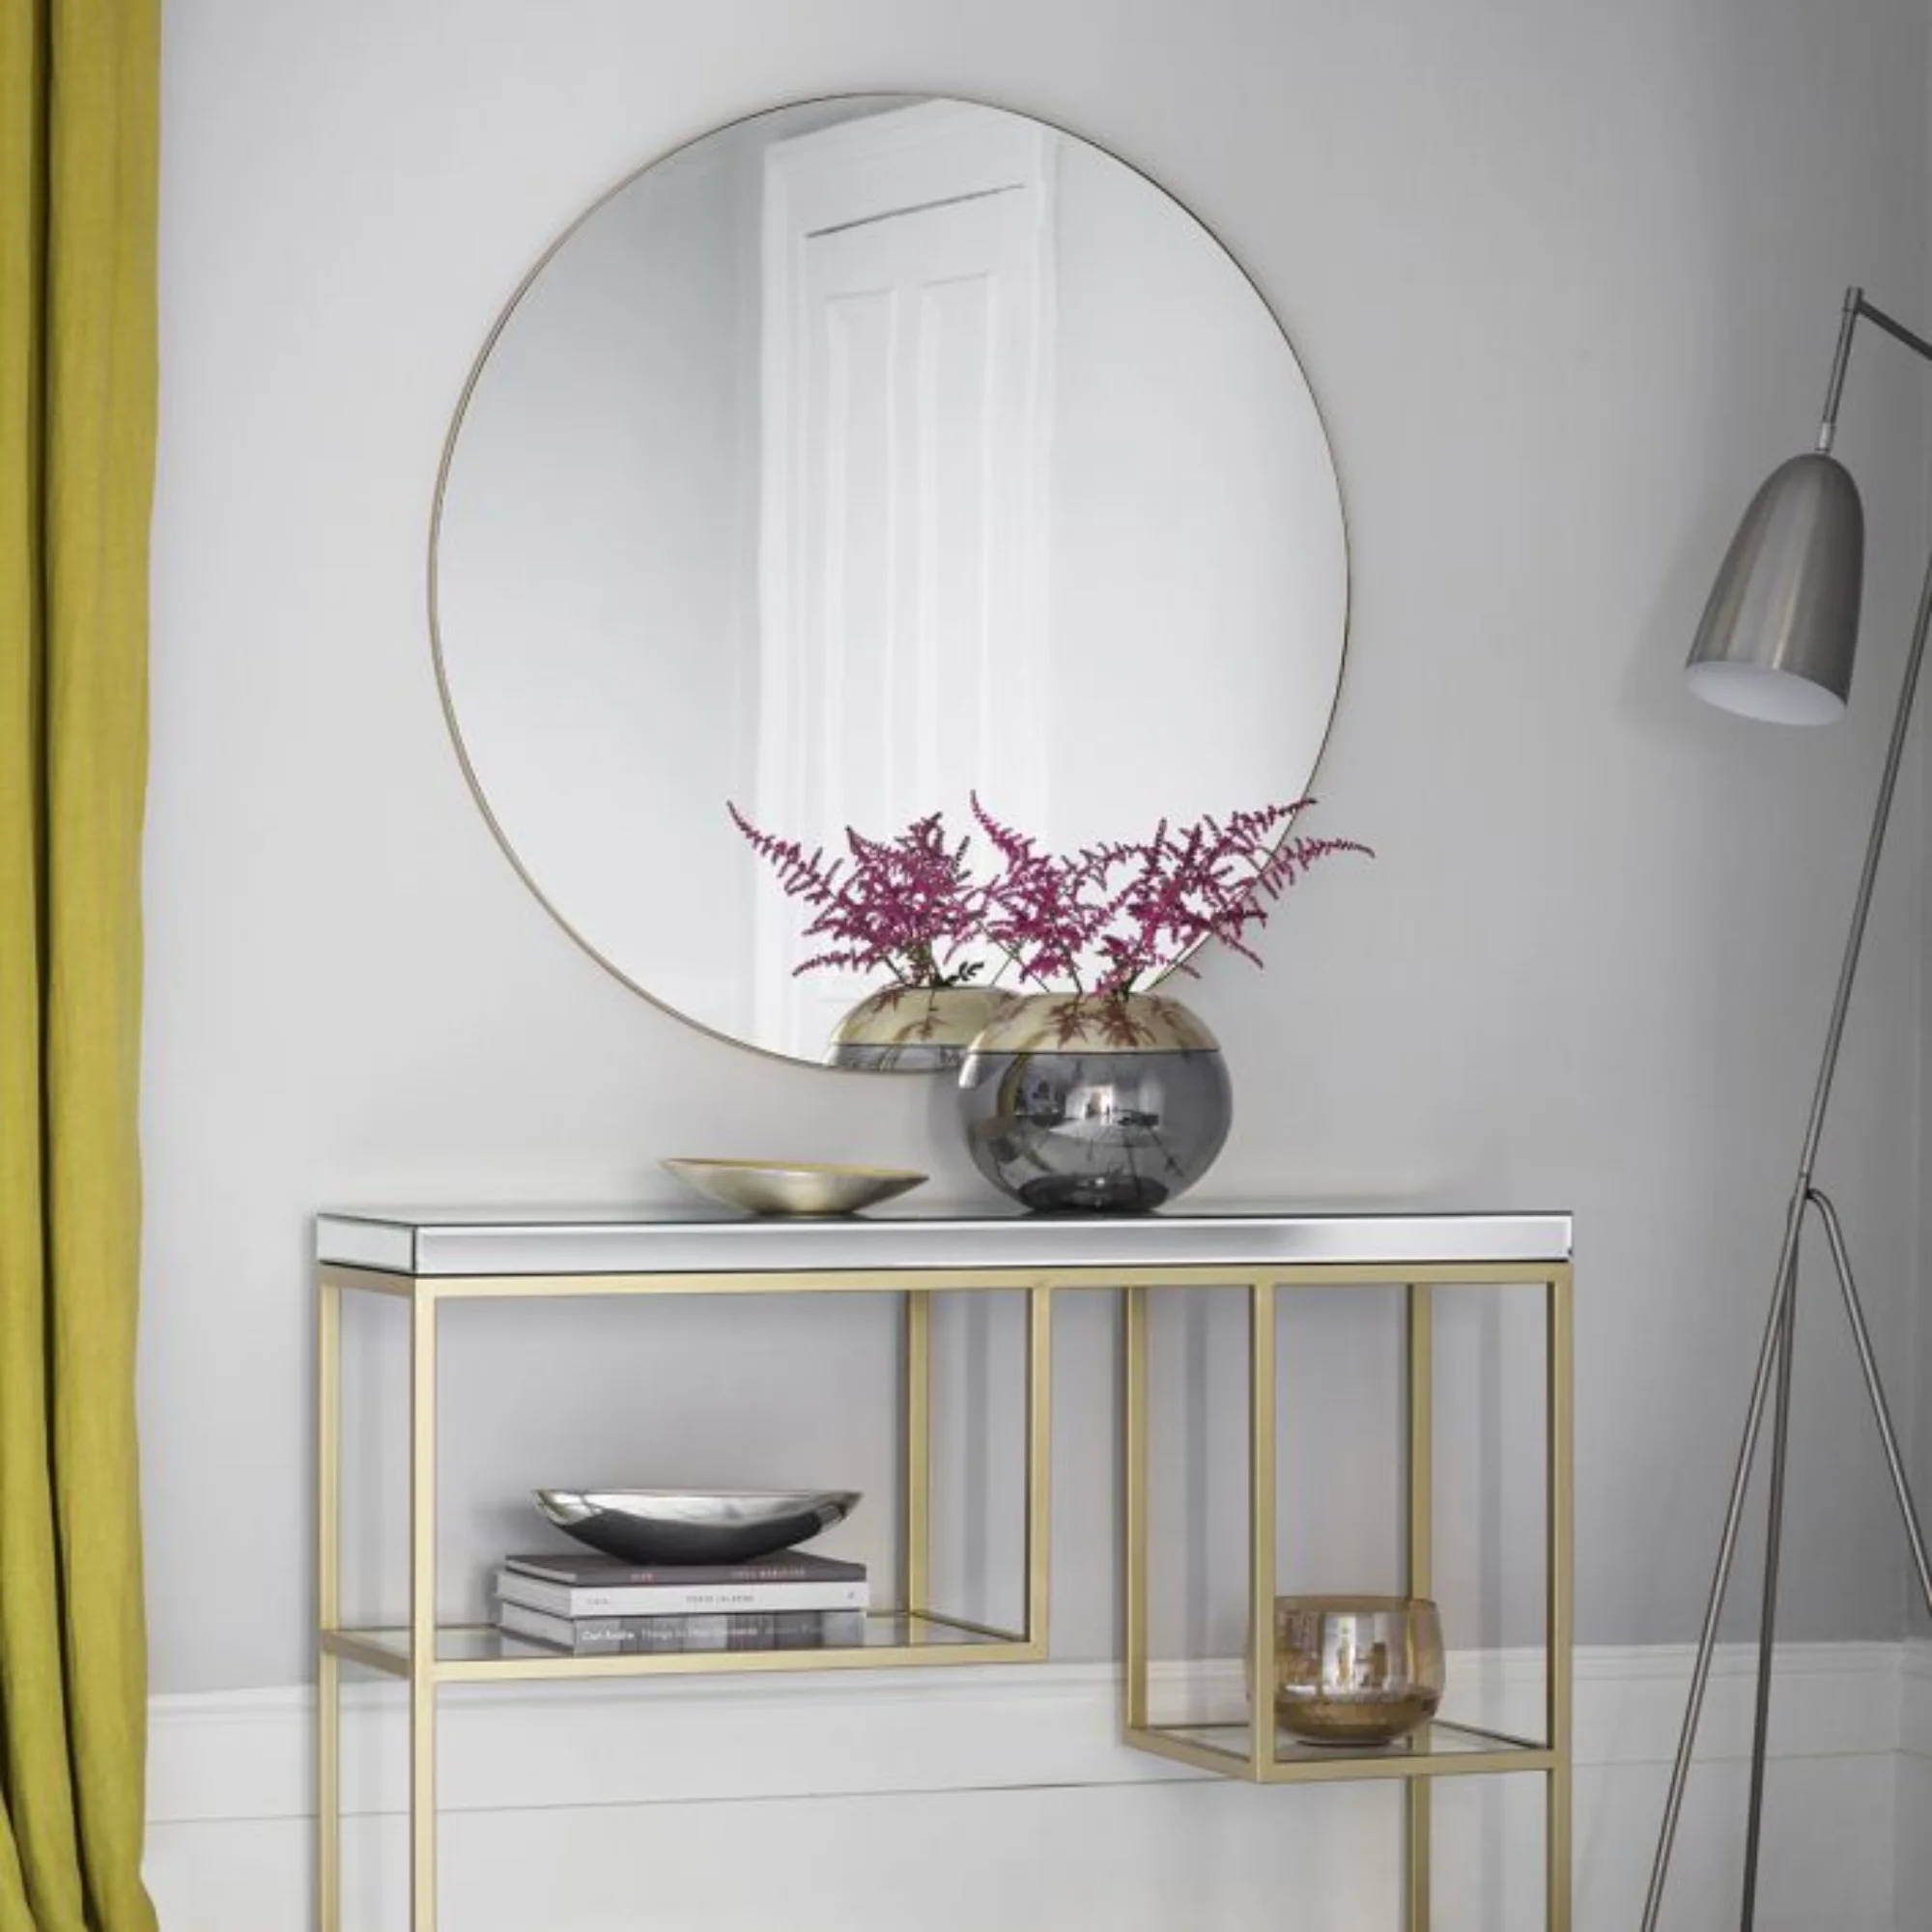 Fitz 100cm diameter round wall mirror with champagne gold metal frame | MalletandPlane.com